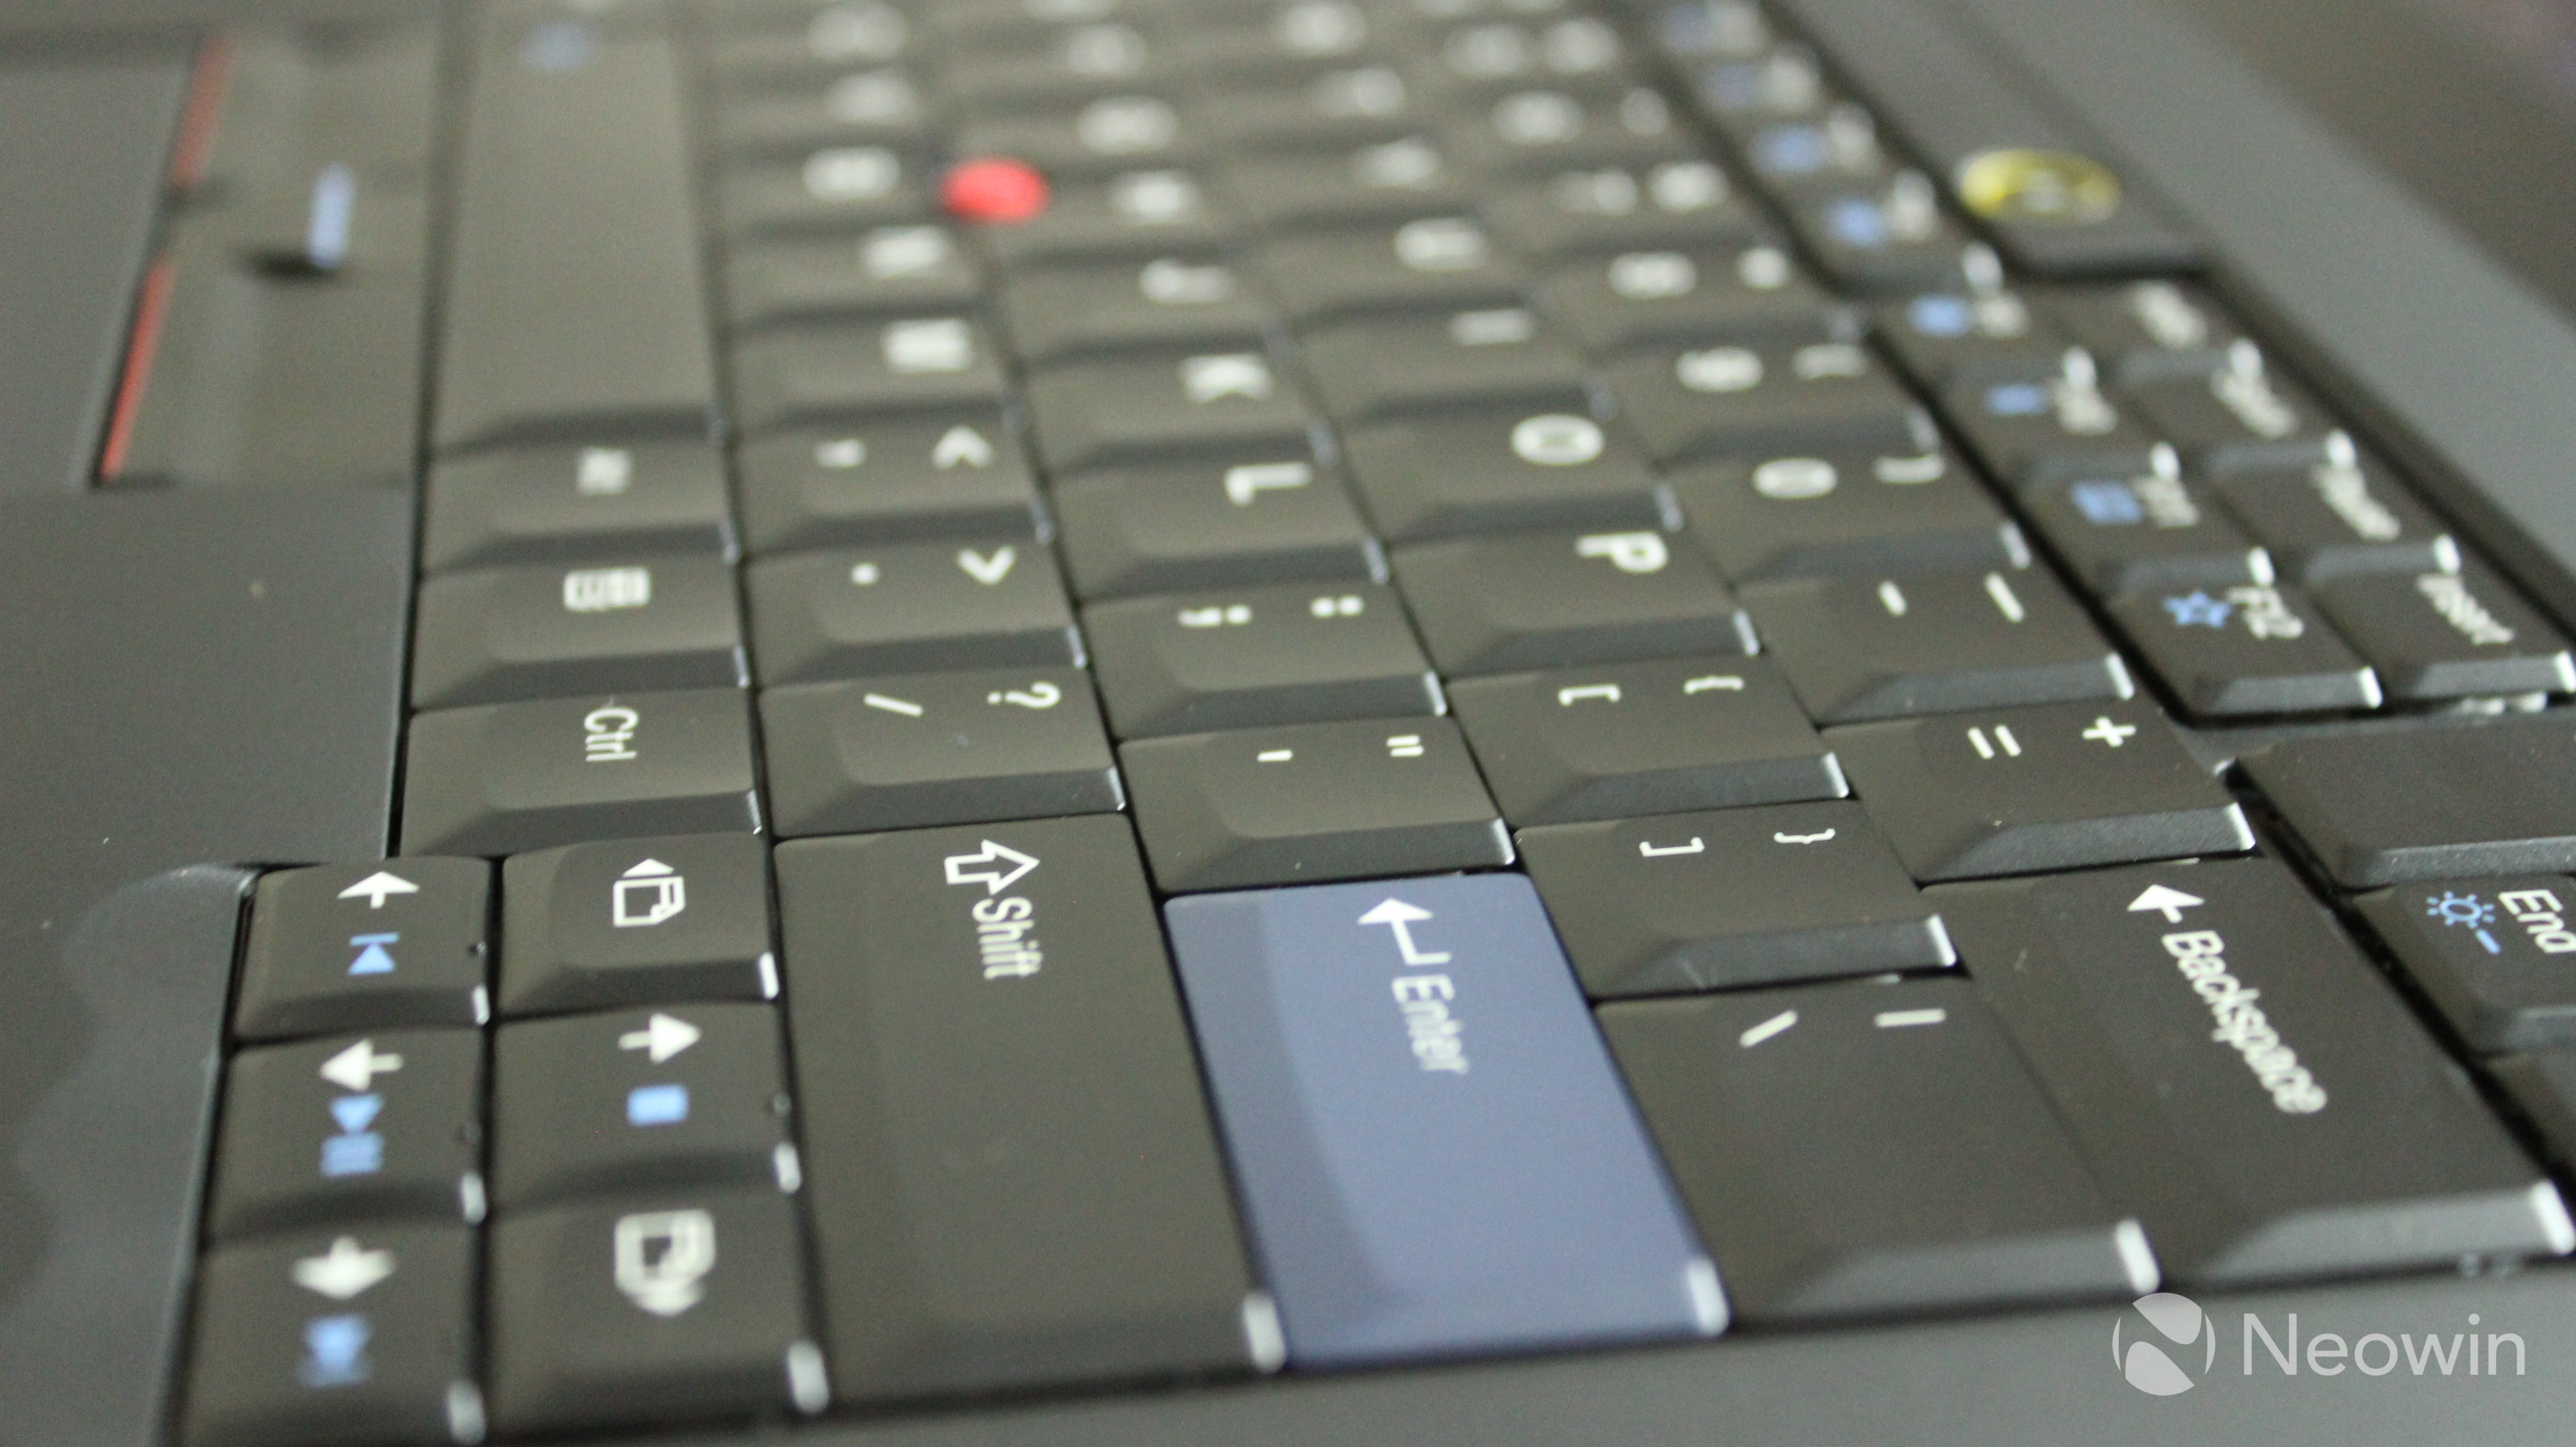 Lenovo ThinkPad 25 review: Sweet nostalgic design with modern 